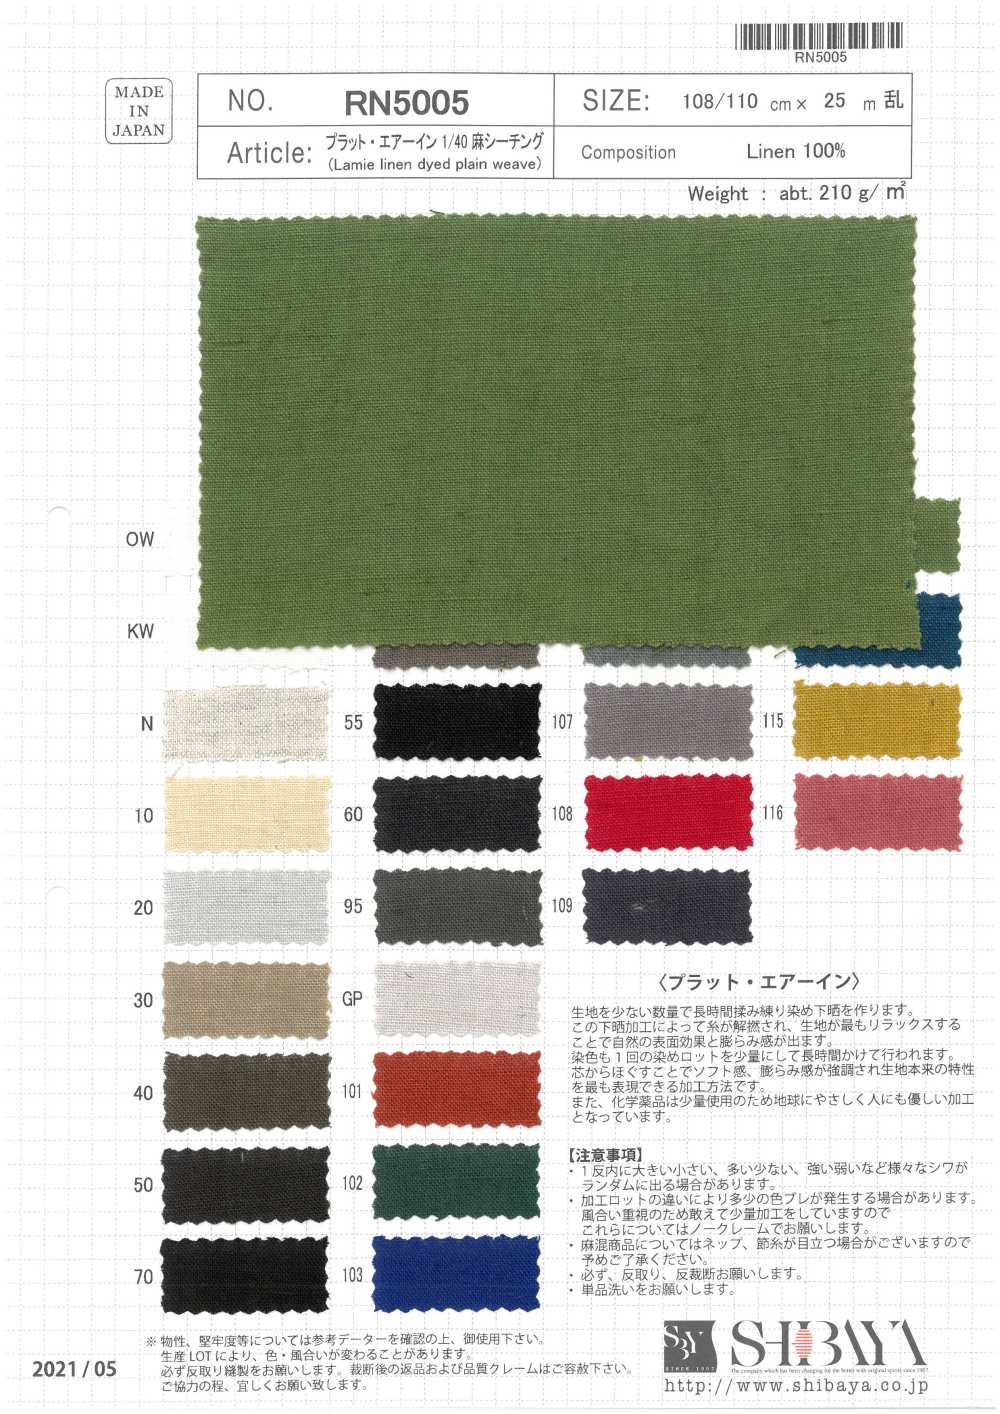 RN5005 Plat Air In Airin 1/40 Linen Loomstate[Textile / Fabric] SHIBAYA